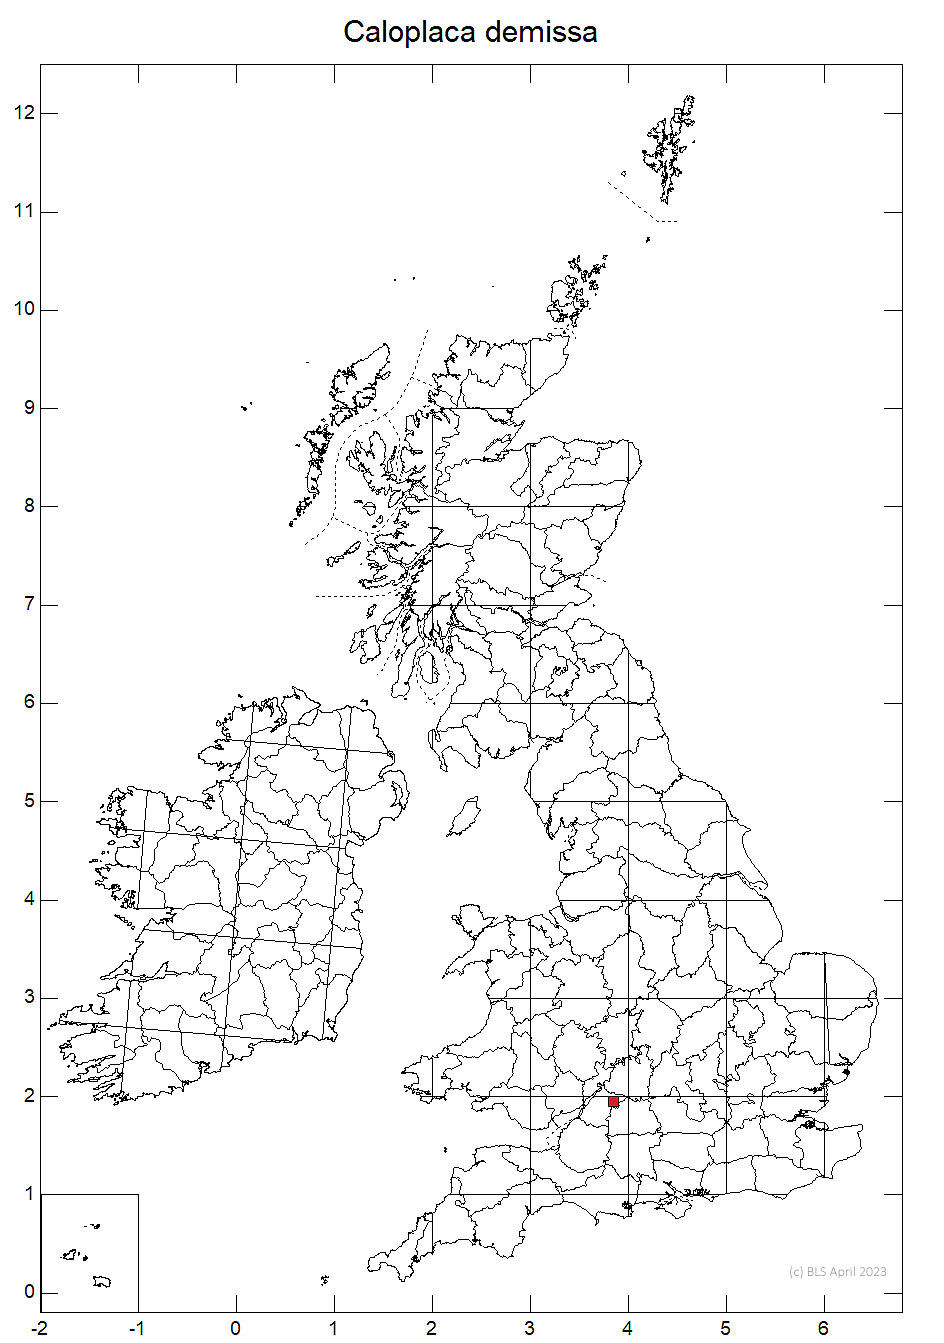 Caloplaca demissa 10km sq distribution map